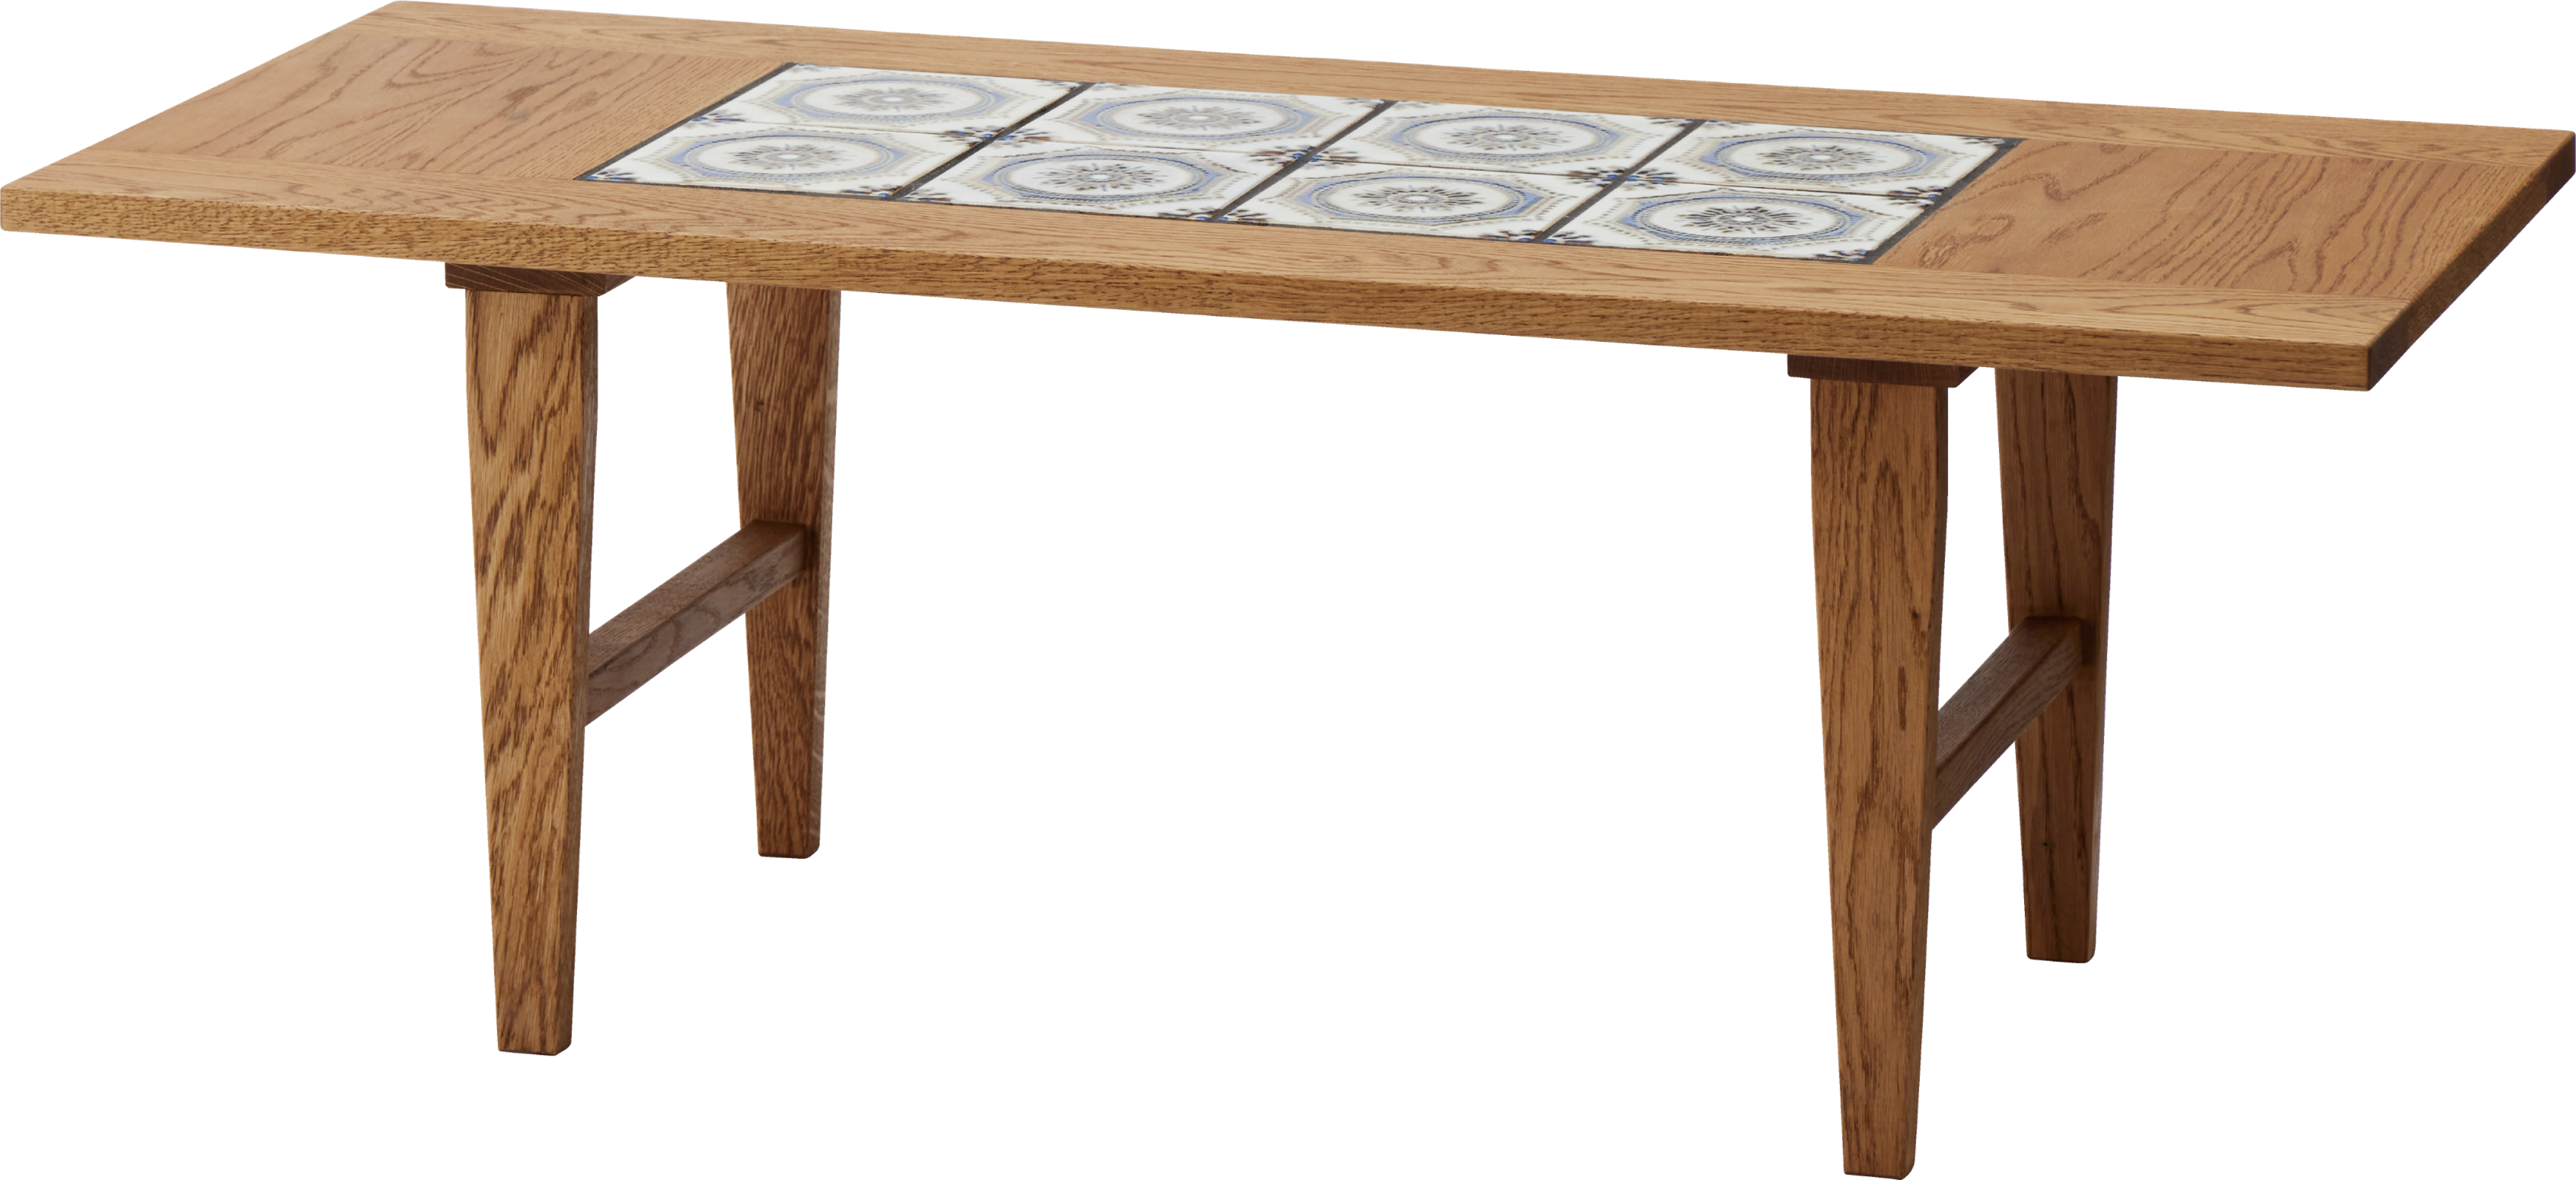 Majolica Tile Table